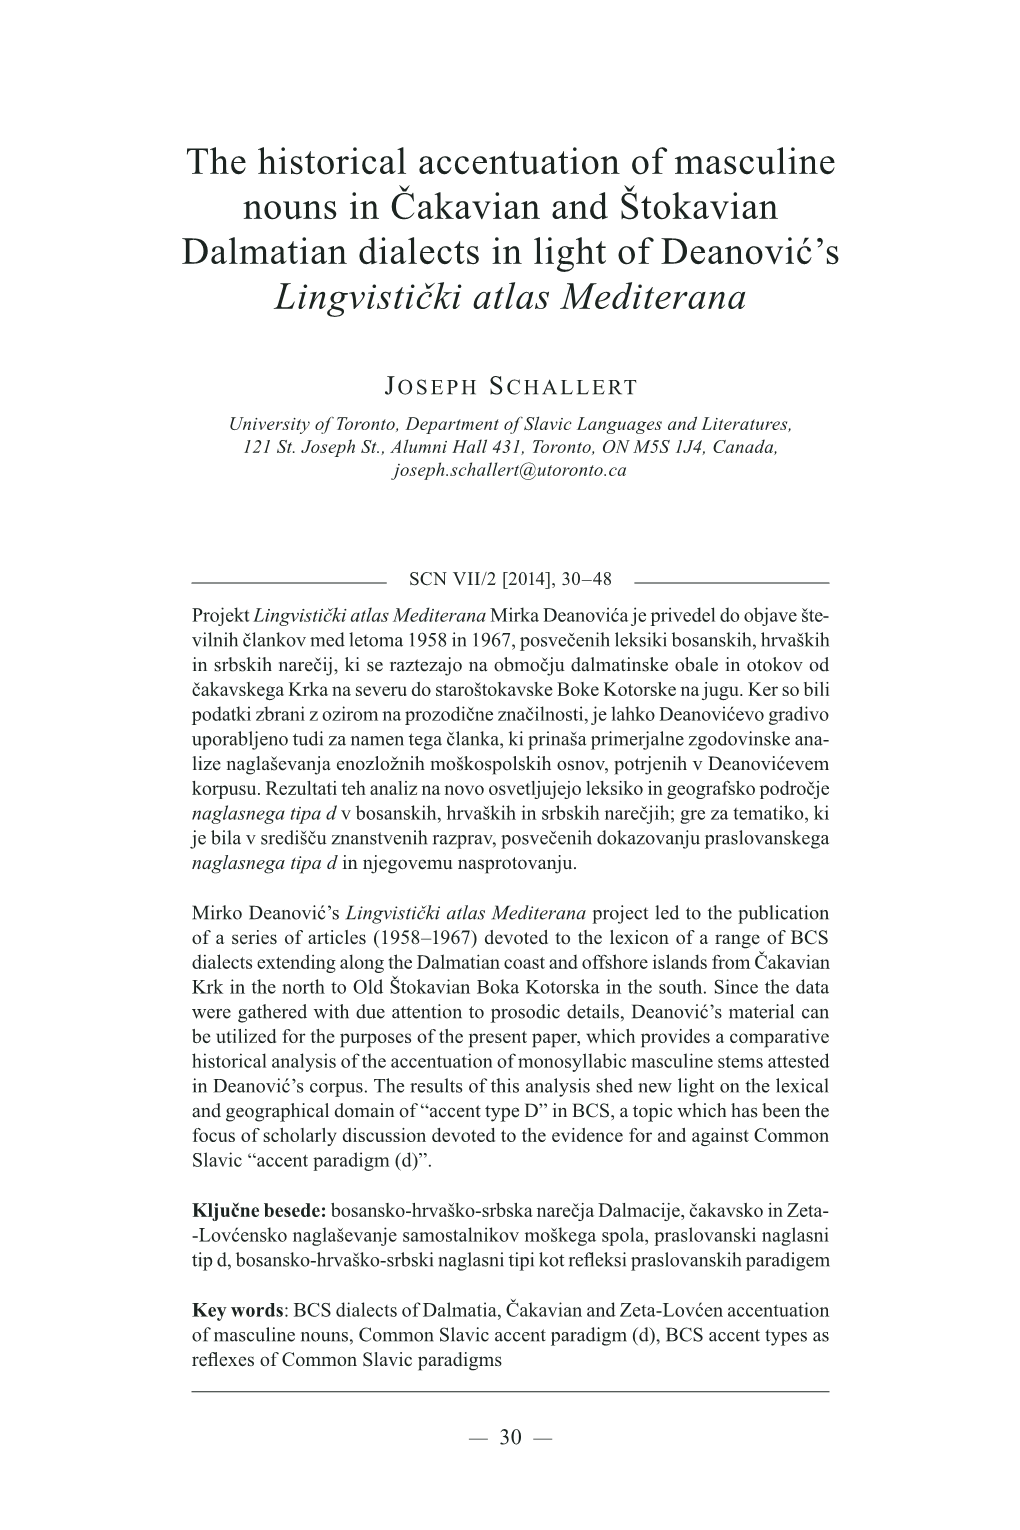 The Historical Accentuation of Masculine Nouns in Čakavian and Štokavian Dalmatian Dialects in Light of Deanović’S Lingvistički Atlas Mediterana